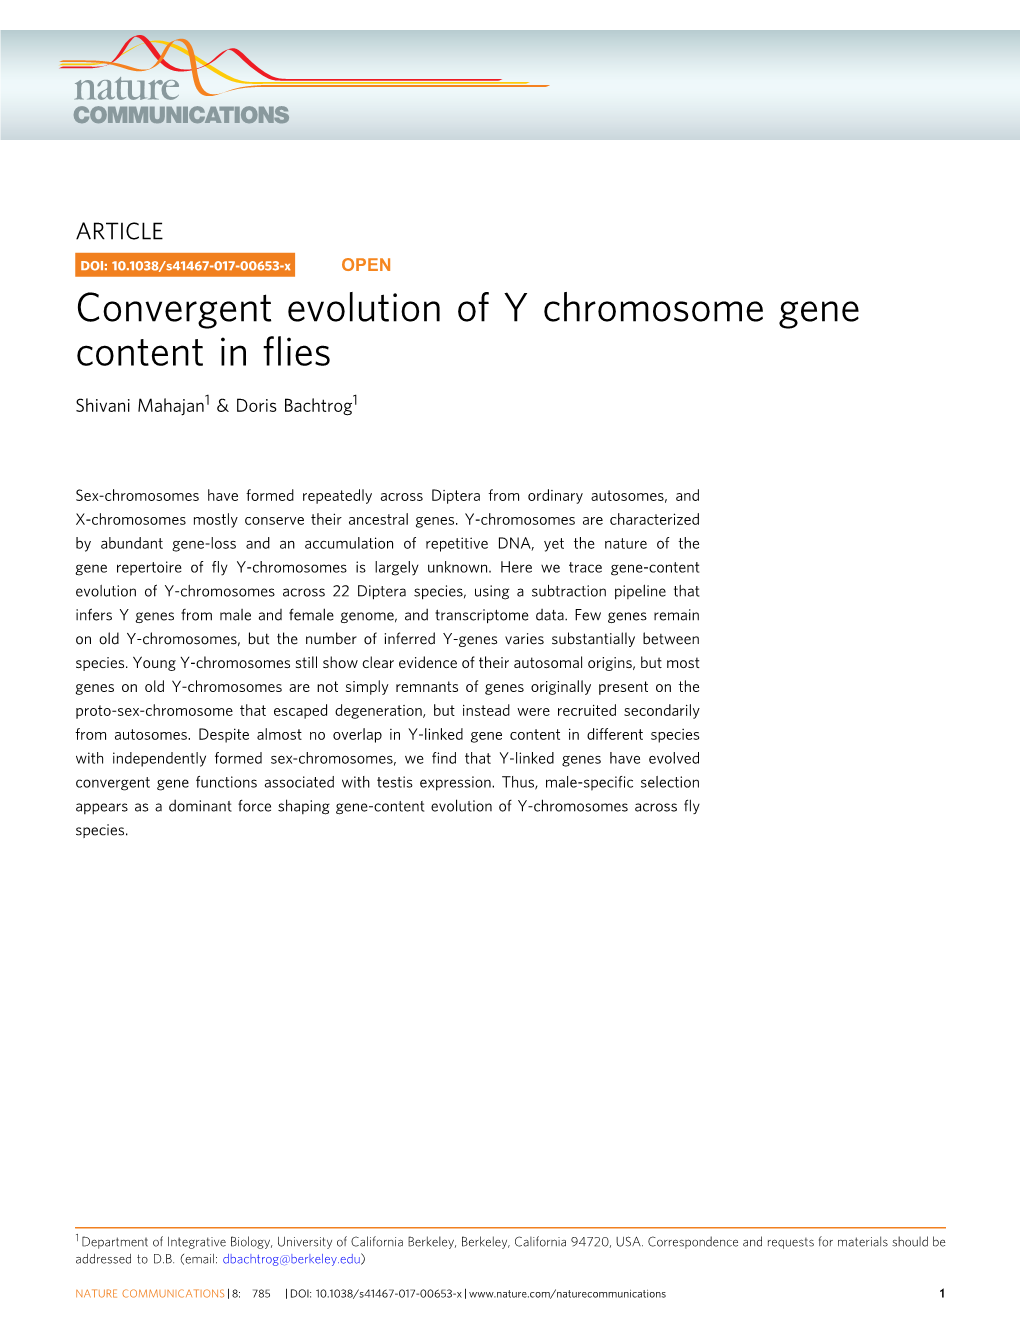 Convergent Evolution of Y Chromosome Gene Content in Flies